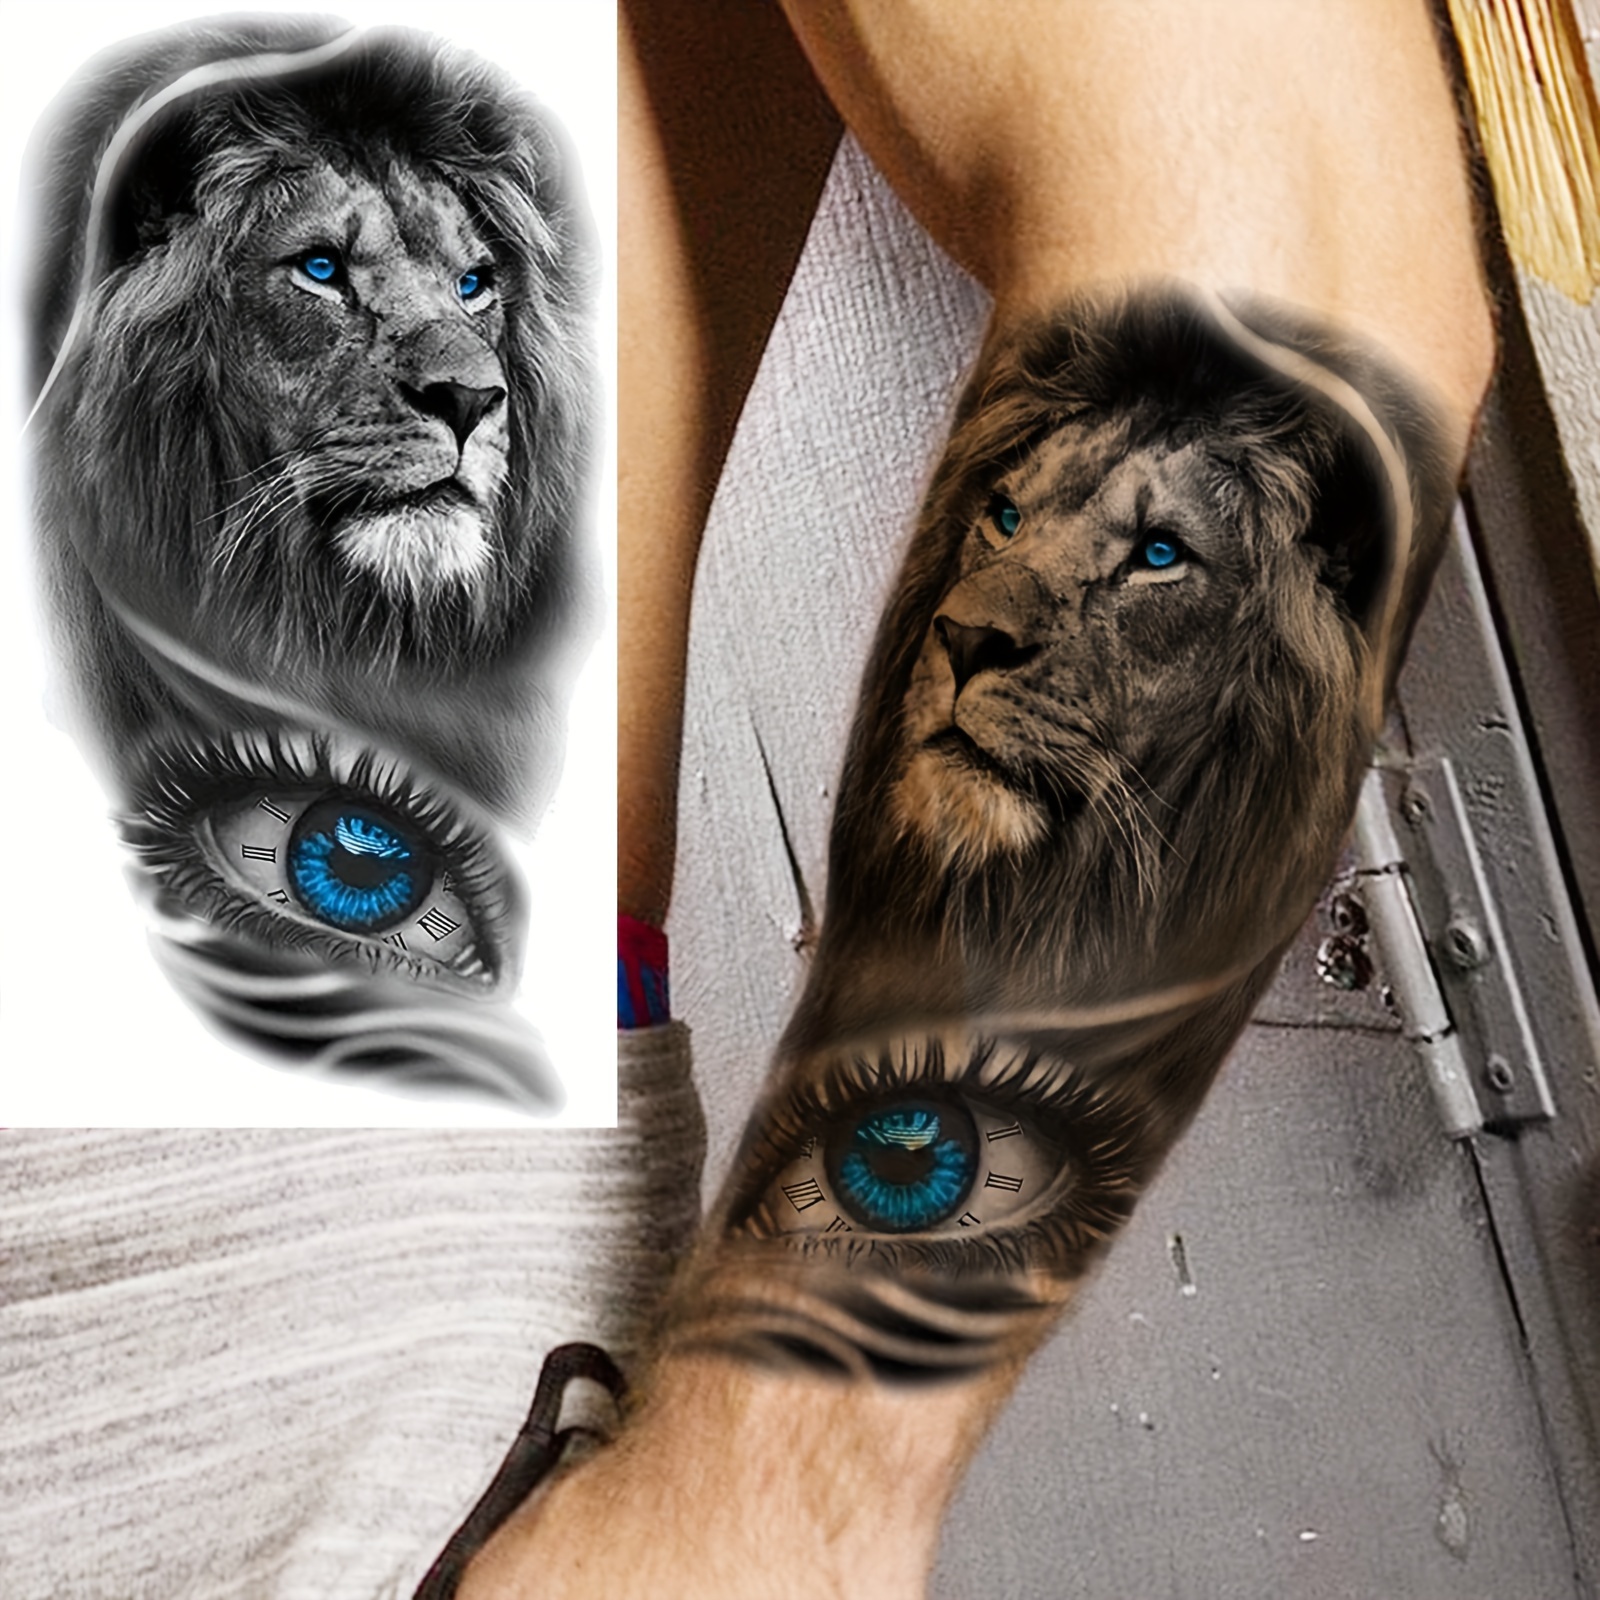 

Realistic Lion Temporary Tattoo Sticker - Waterproof, 3d Eye Design For Arms & Legs, Long-lasting Body Art For Men & Women